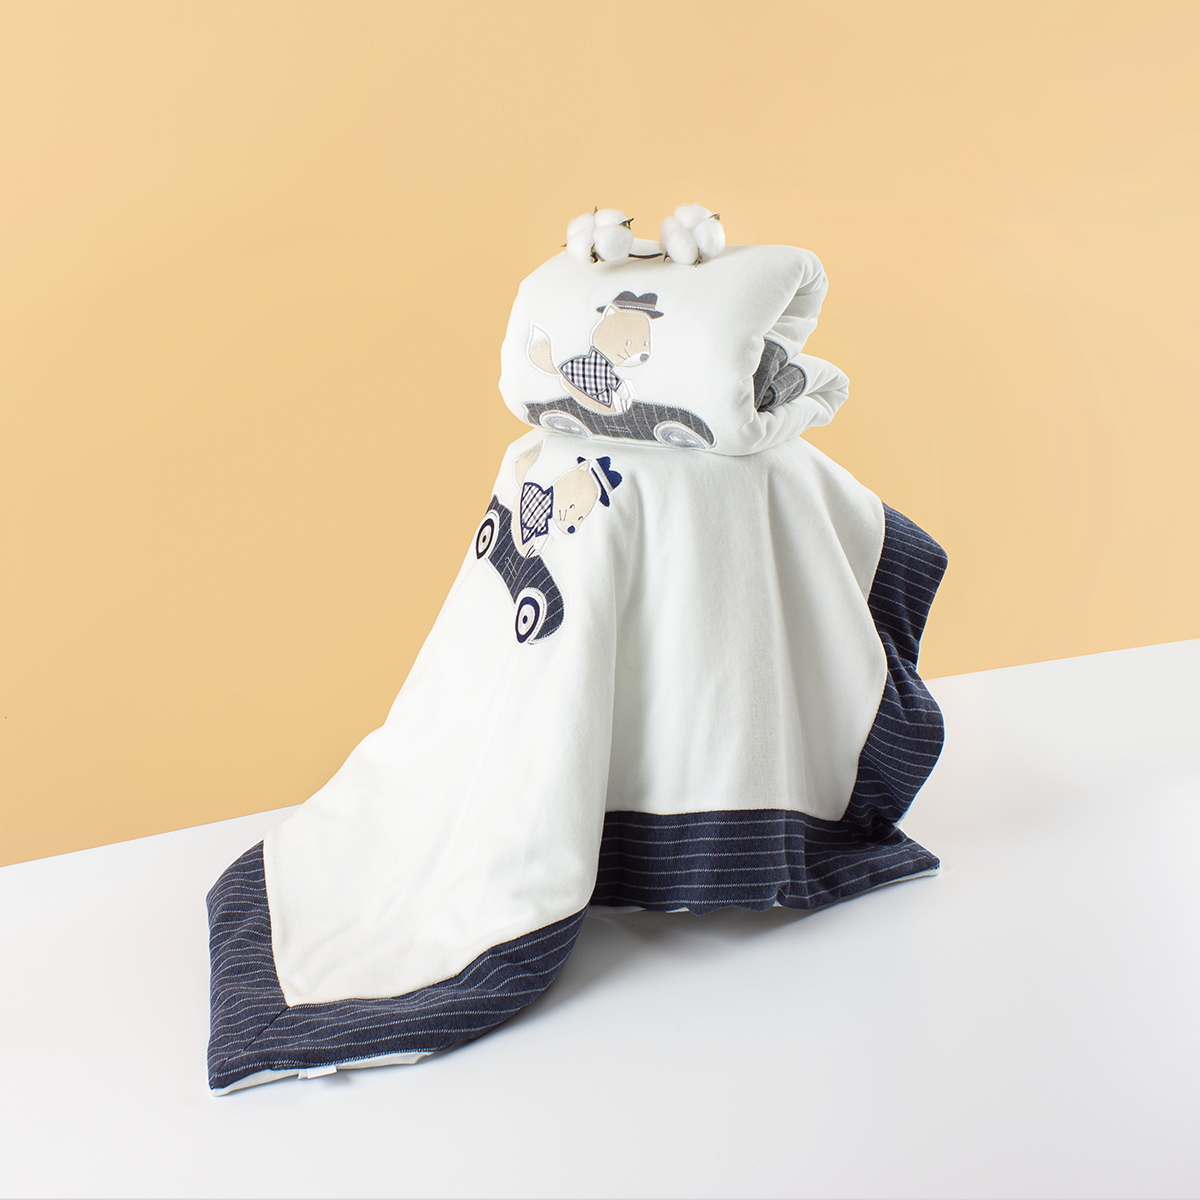 12 536 Embroidered Soft Newborn Cute Baby Blanket